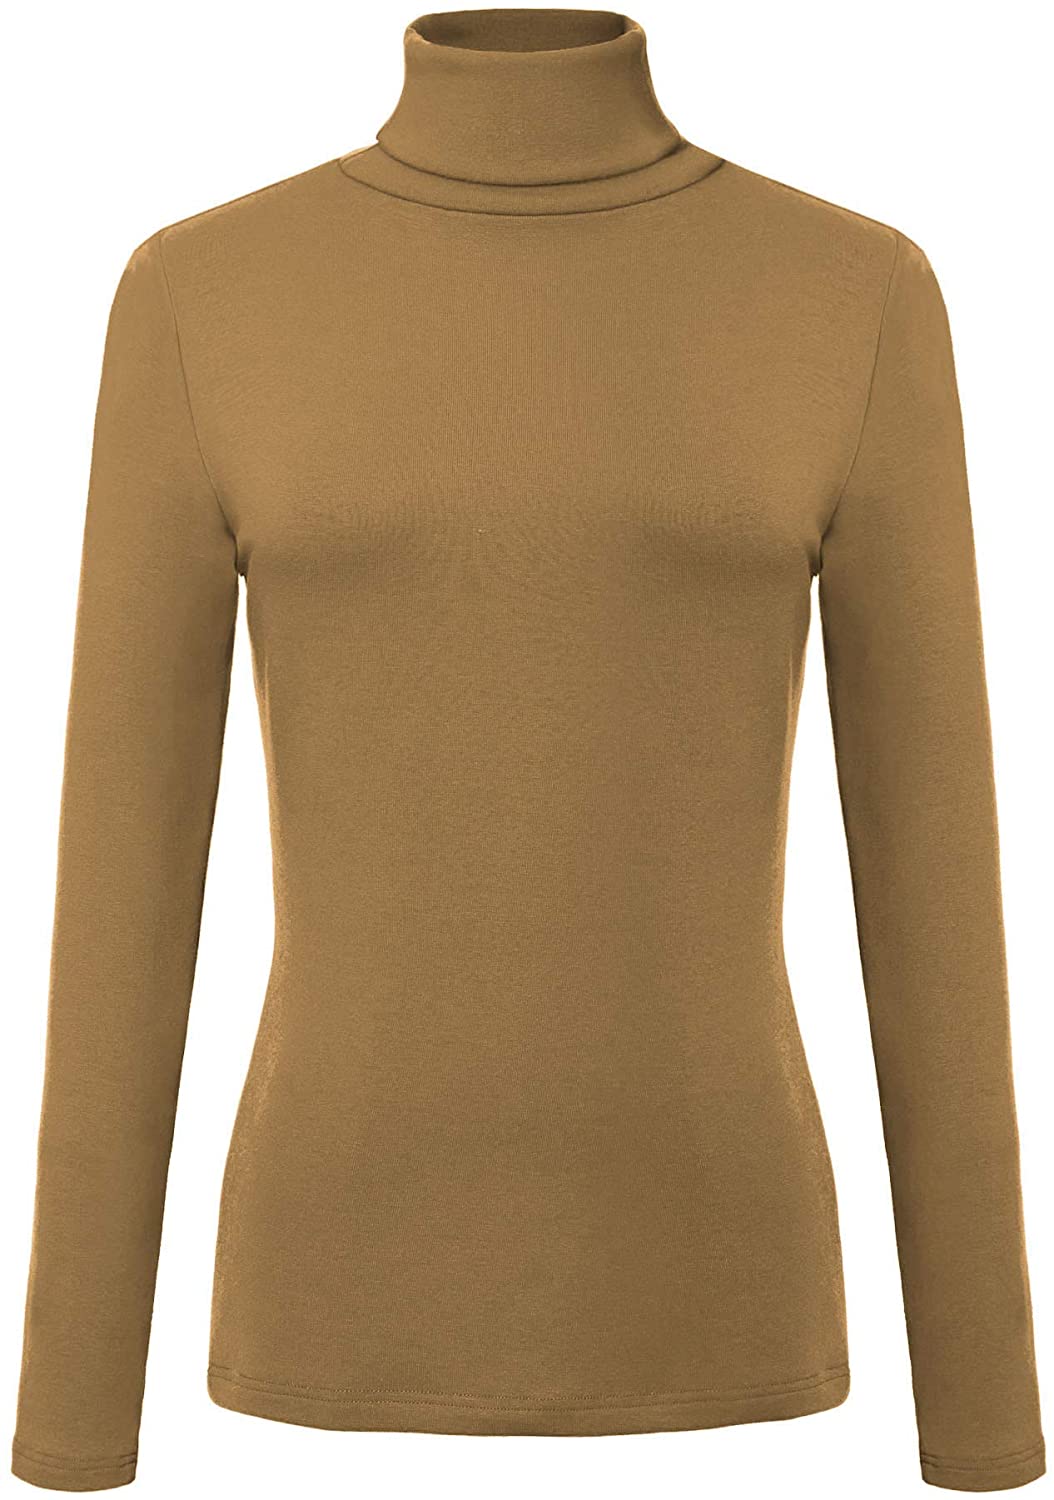 Urban CoCo Women’s Solid Turtleneck Basic Pullover Sweatshirt 